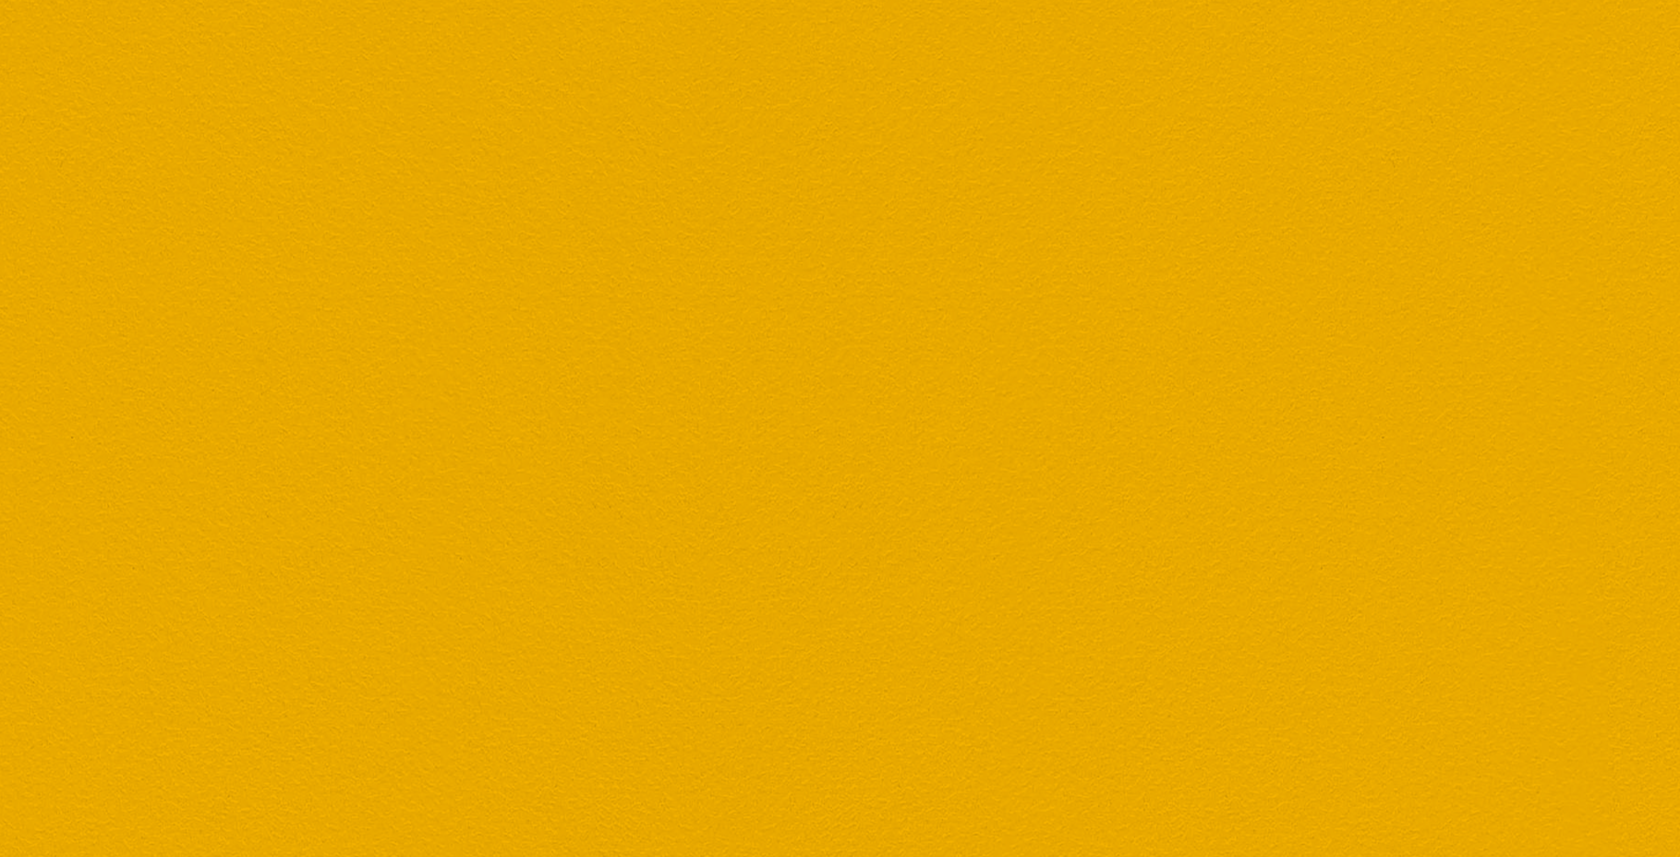 50 26 09. Oracal Brimstone Yellow (жёлтая глянцевая) 641-025g,. Грязно желтый цвет. Тёмно жёлтый цвет. Горчичный цвет фон.